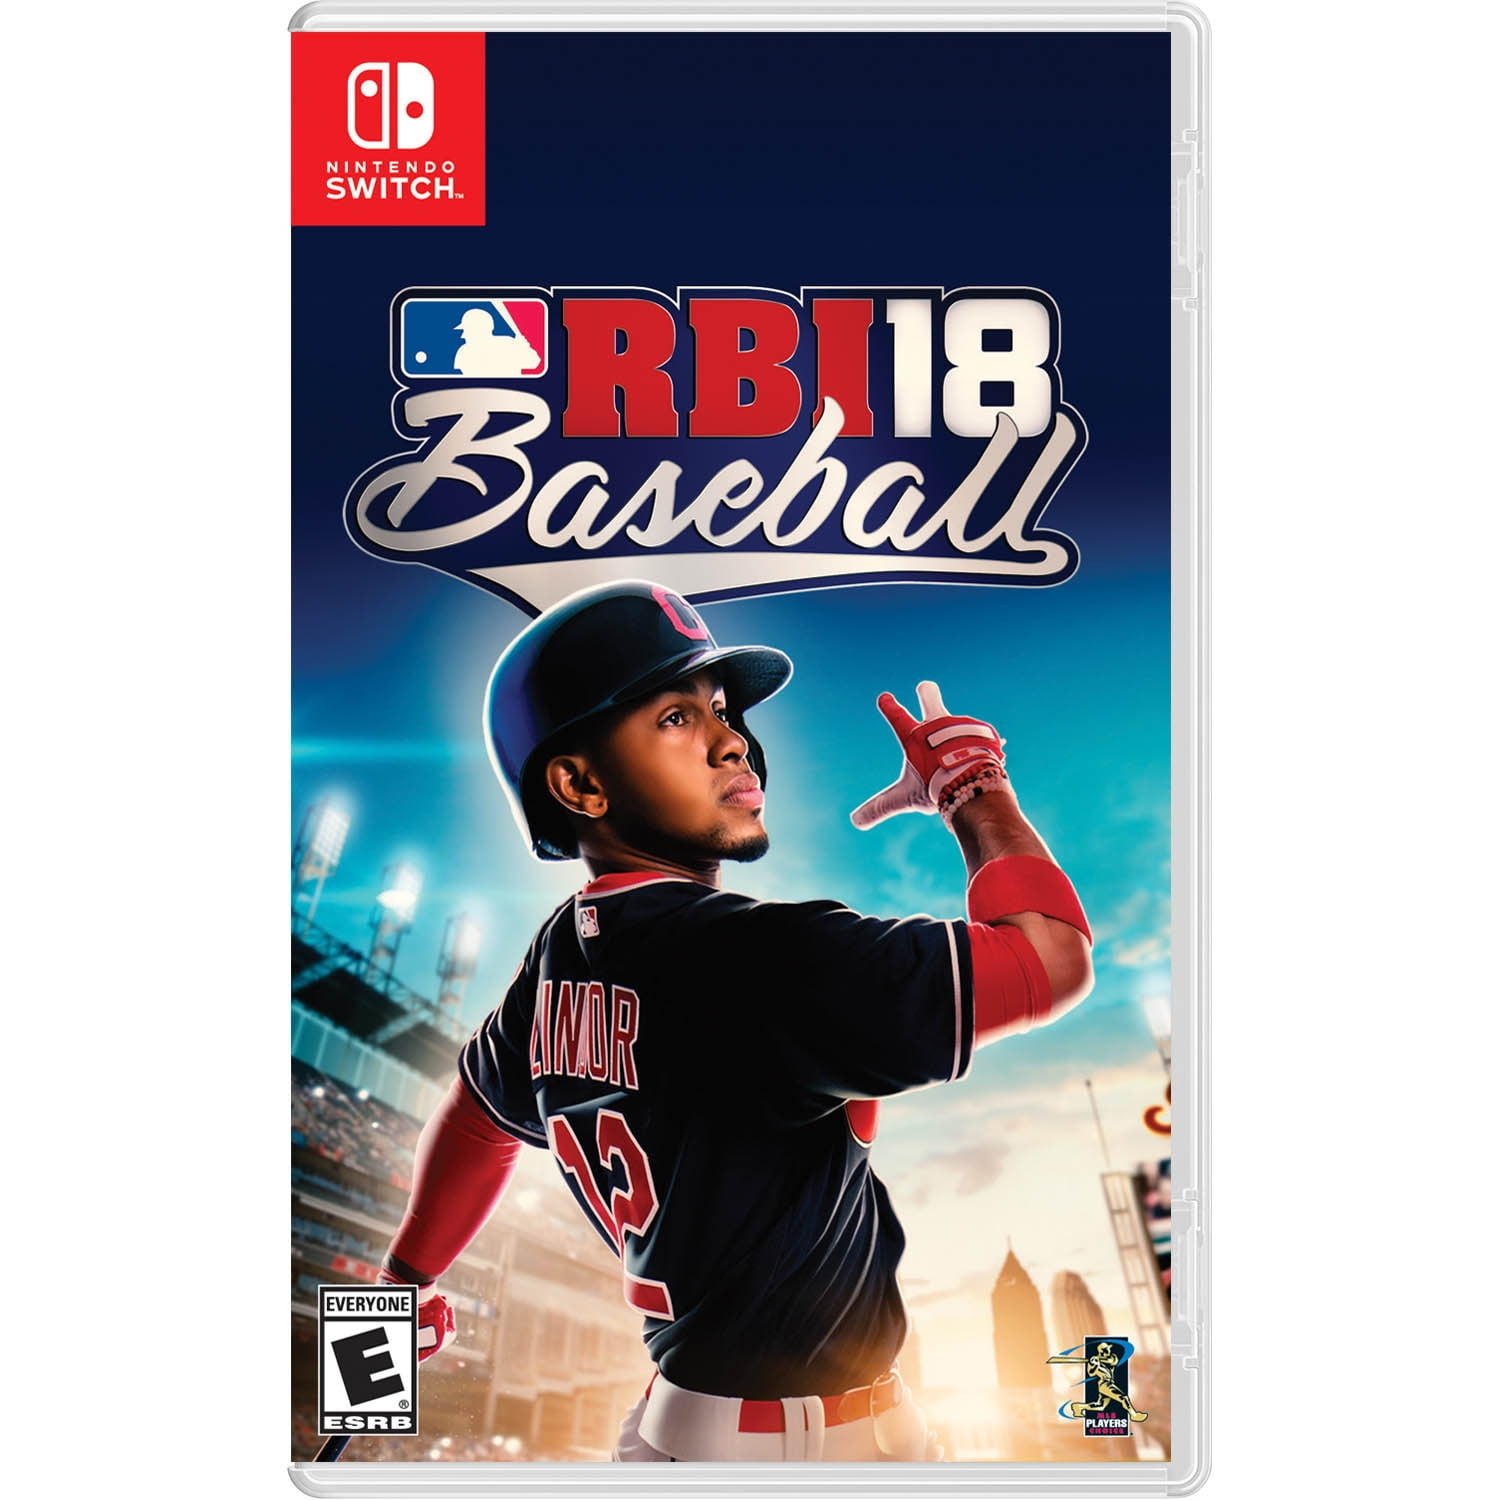 MLB RBI 18 Baseball, Nintendo Switch, REFUBURBISHED/PREOWNED Walmart